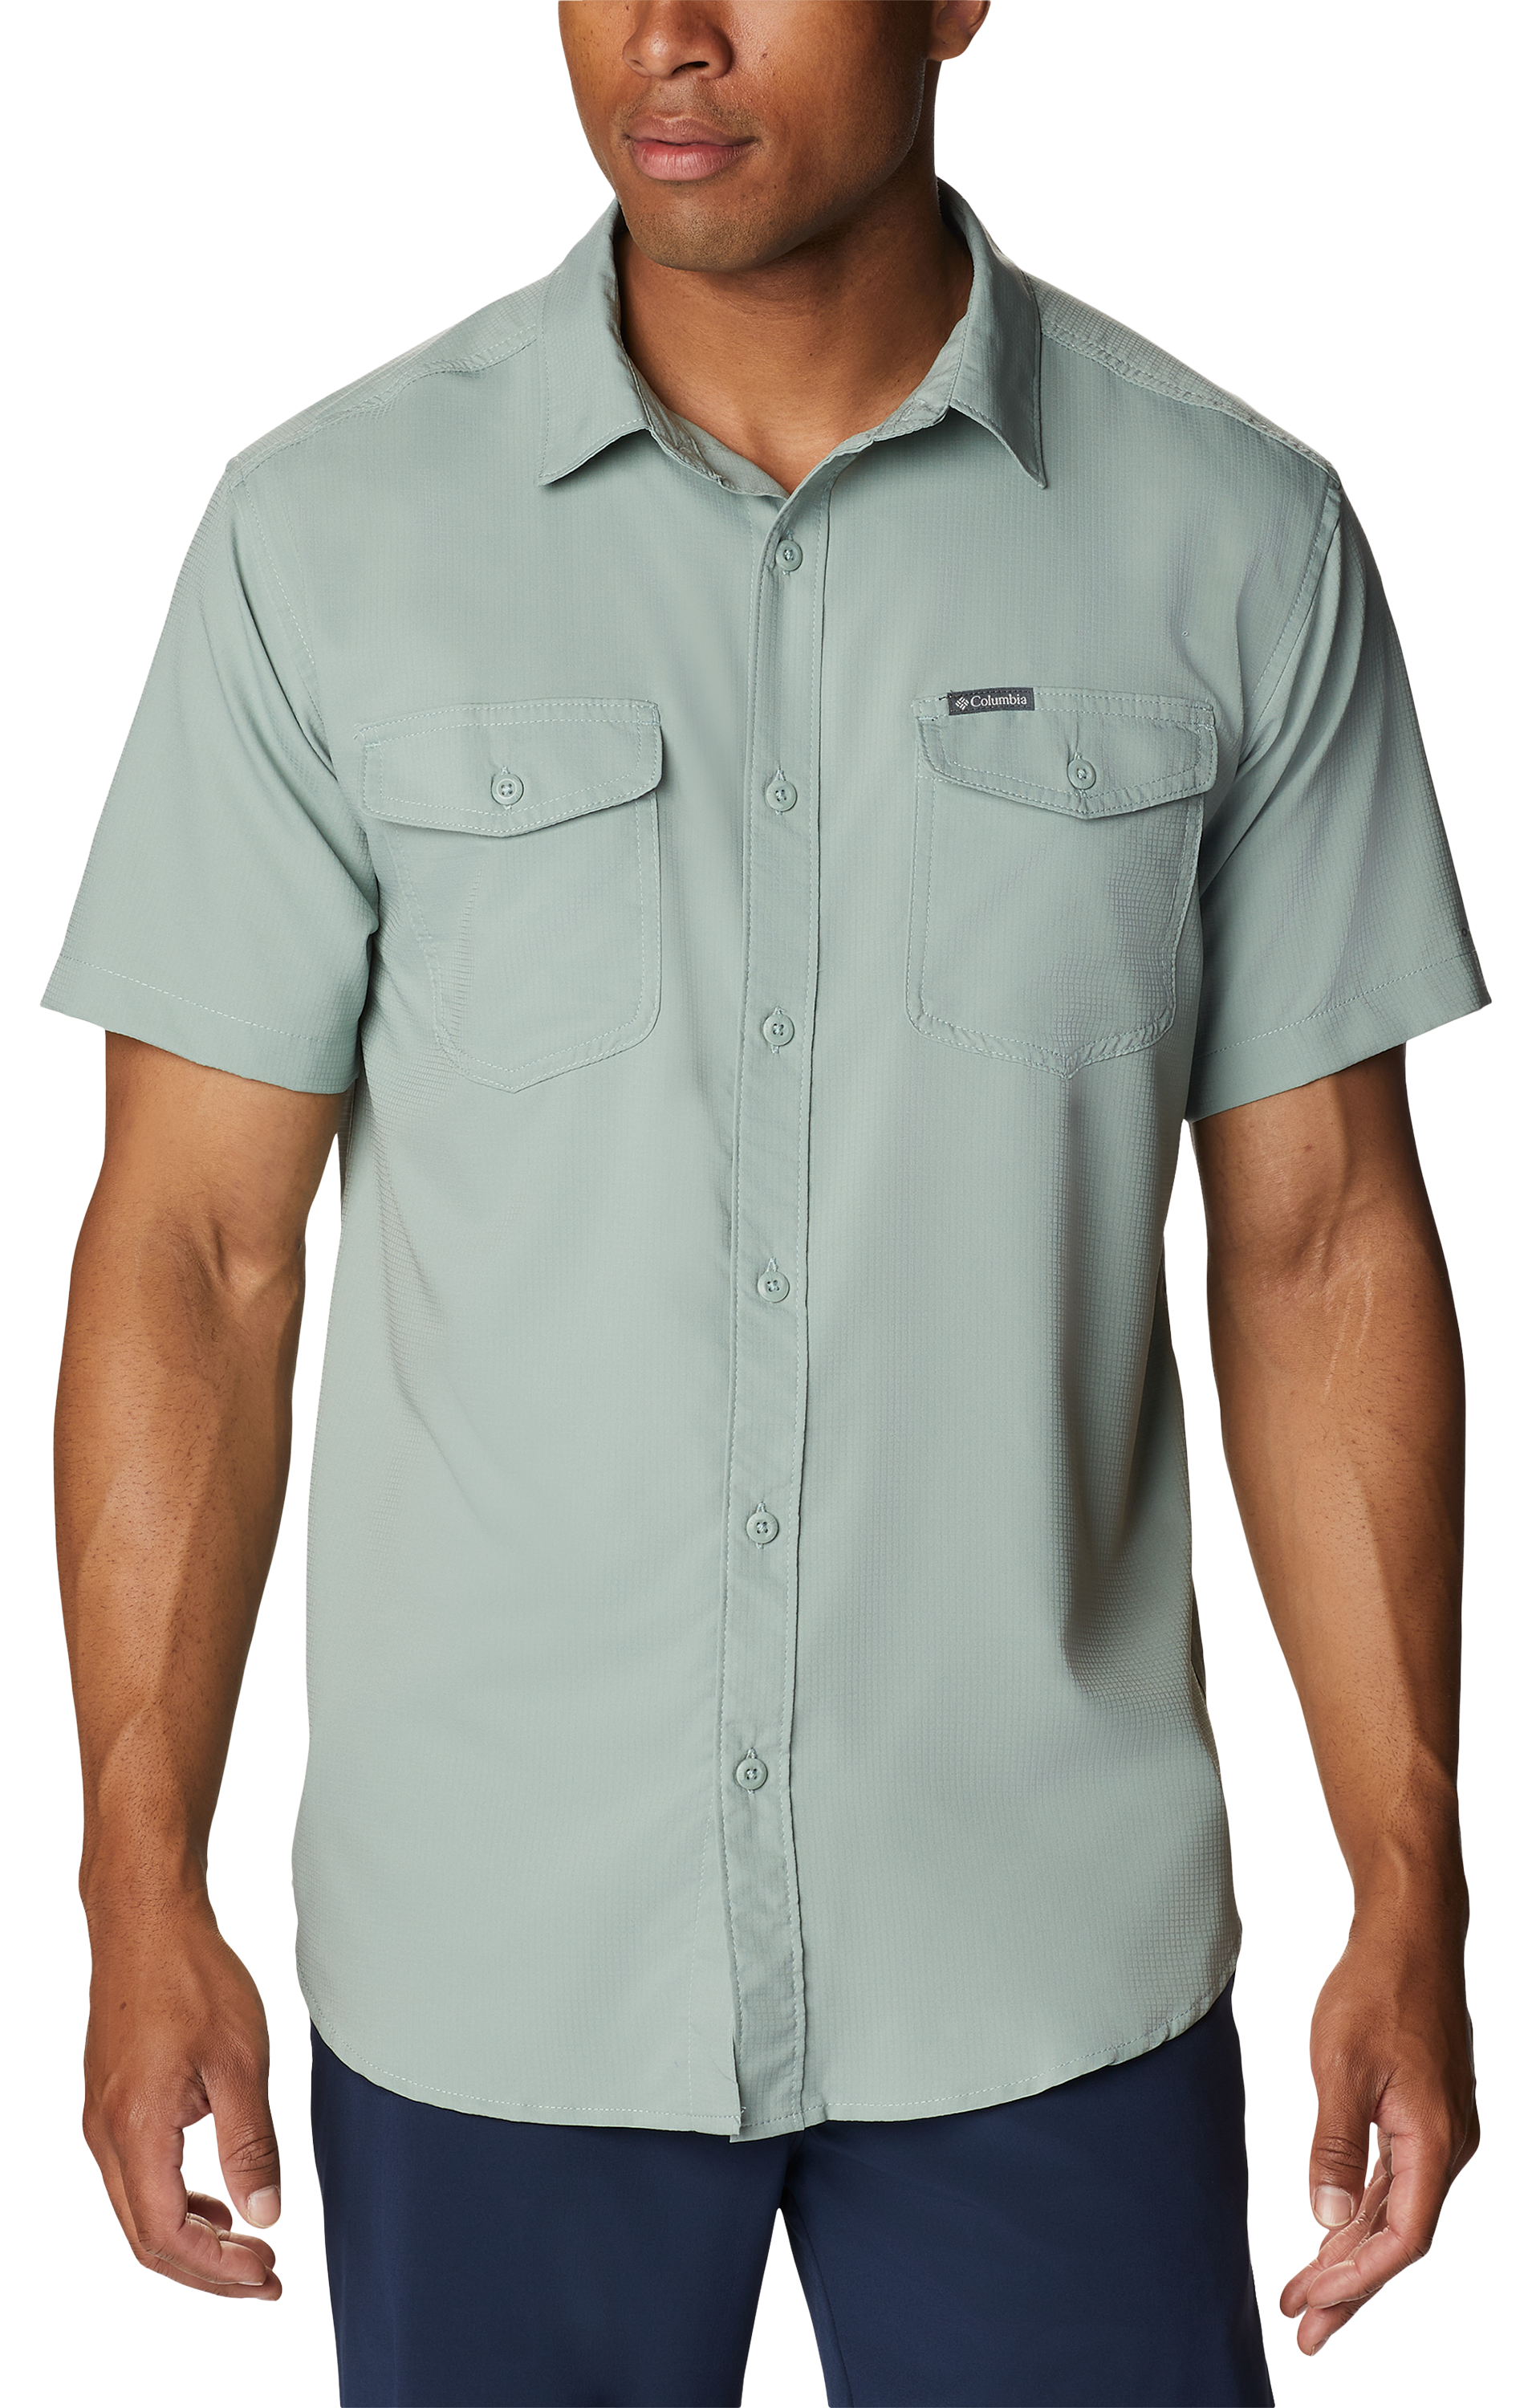 Columbia Utilizer II Solid Short-Sleeve Shirt for Men - Niagara - S